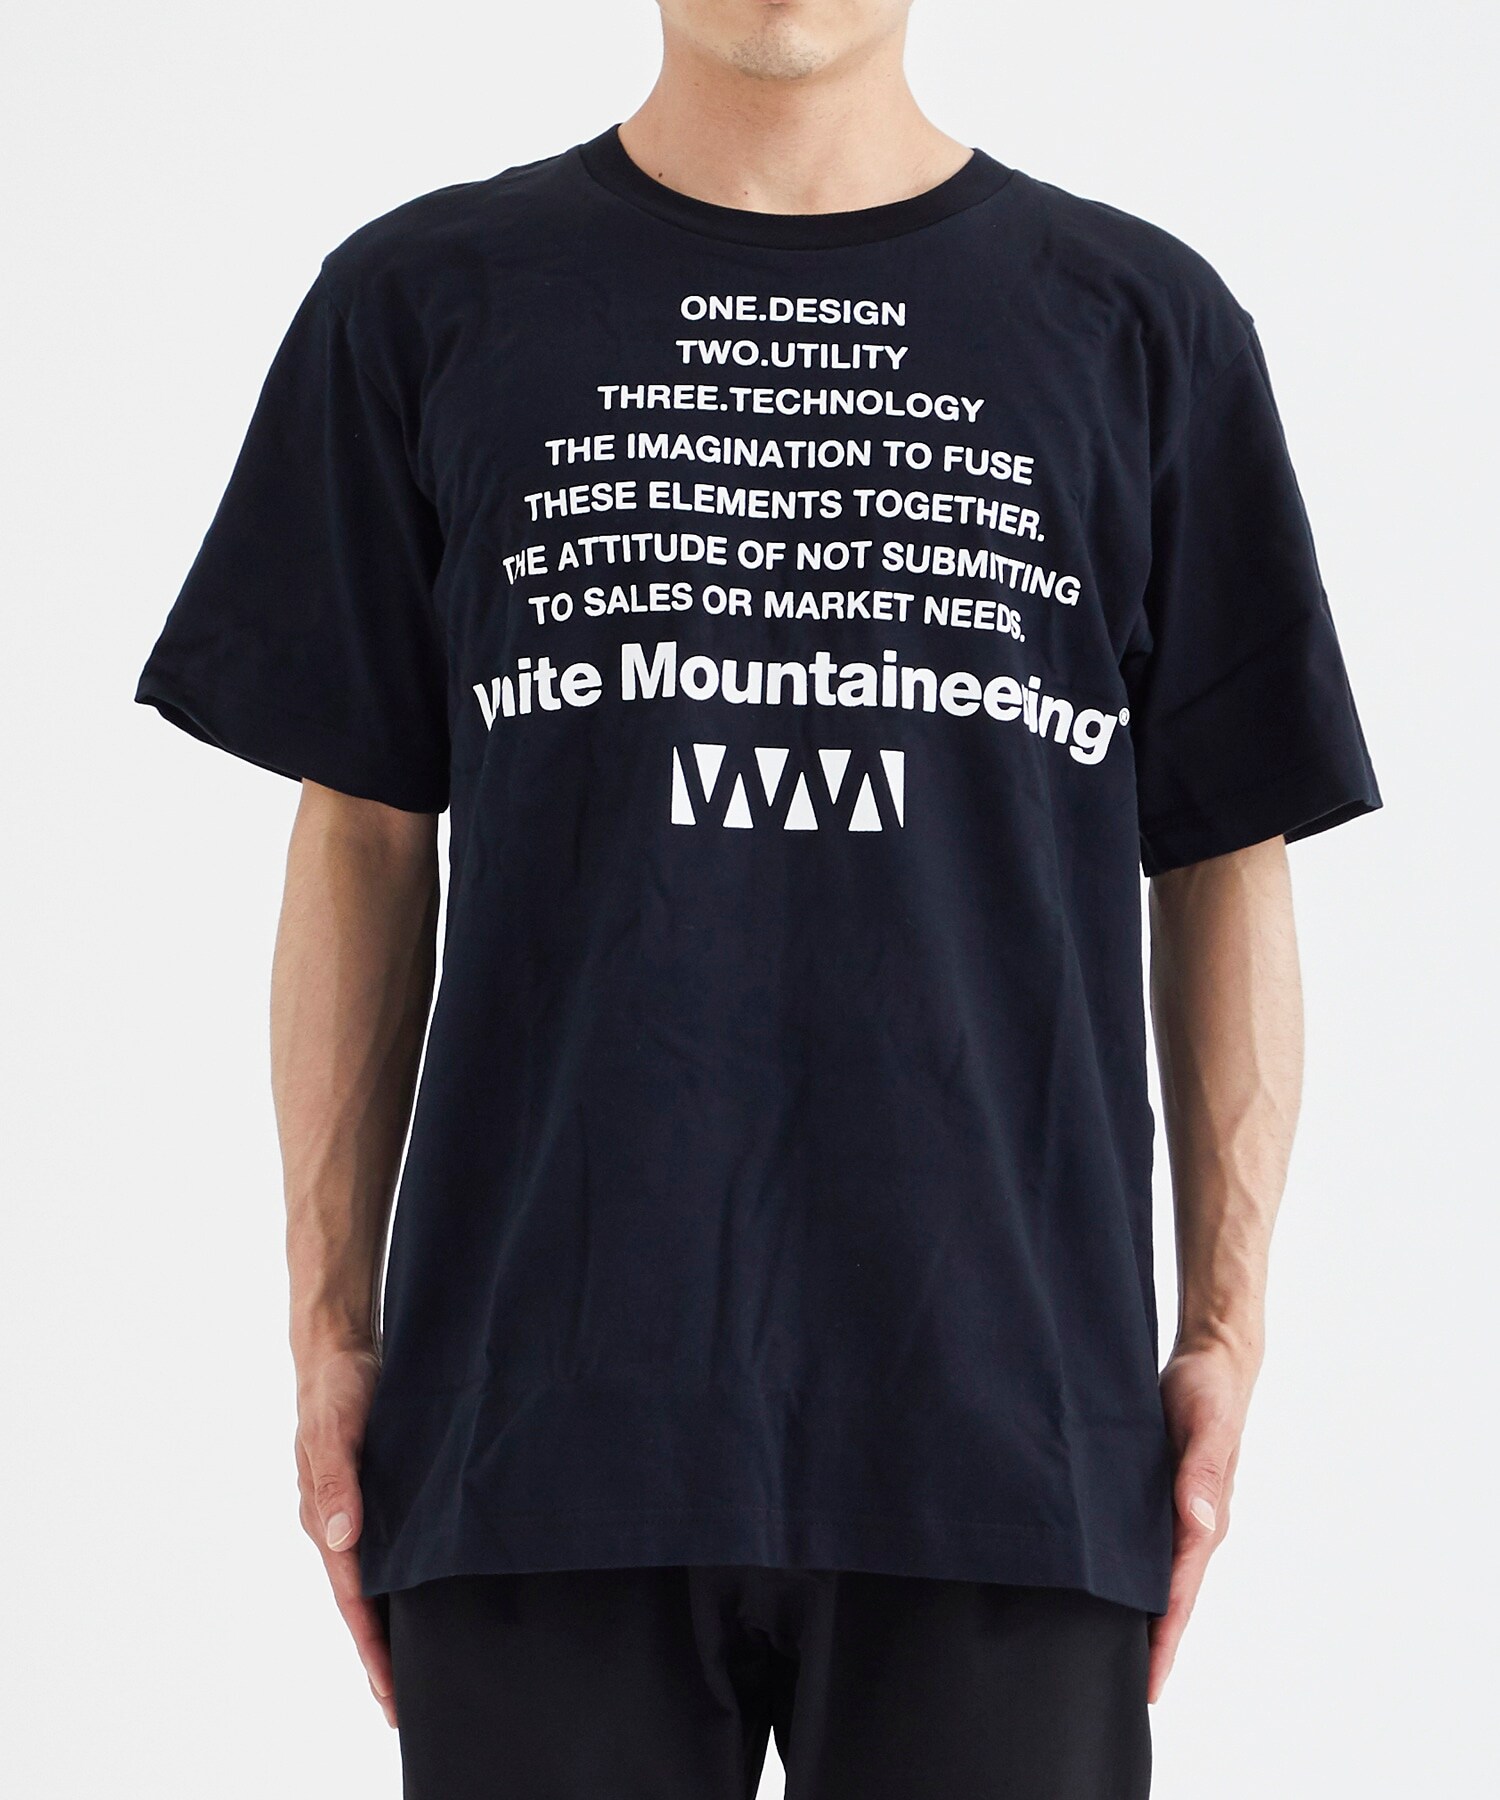 BIG W LOGO PRINTED T-SHIRT White Mountaineering